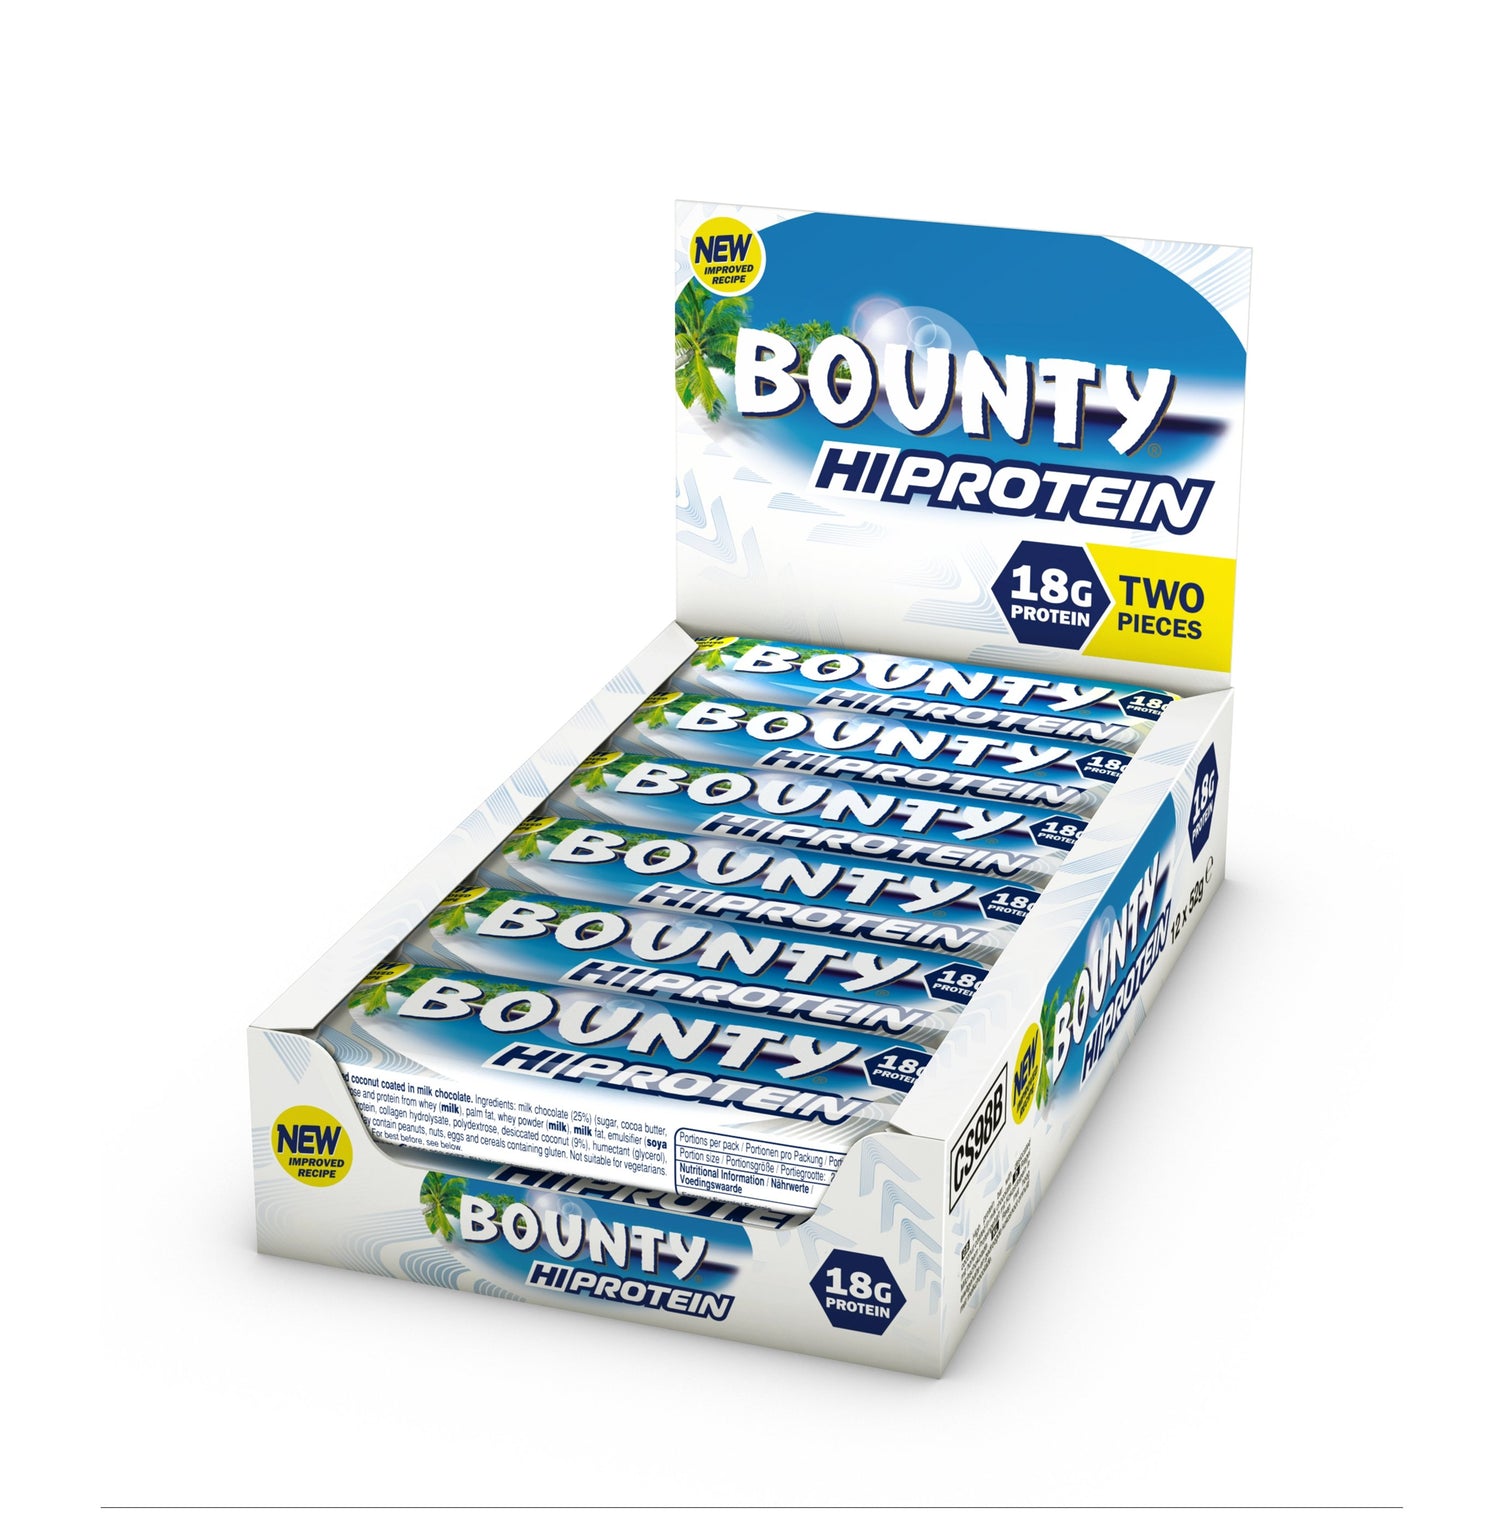 NOVAJ Bounty Hi-Proteinoj-Stangoj (12 x 52g) - theskinnyfoodco